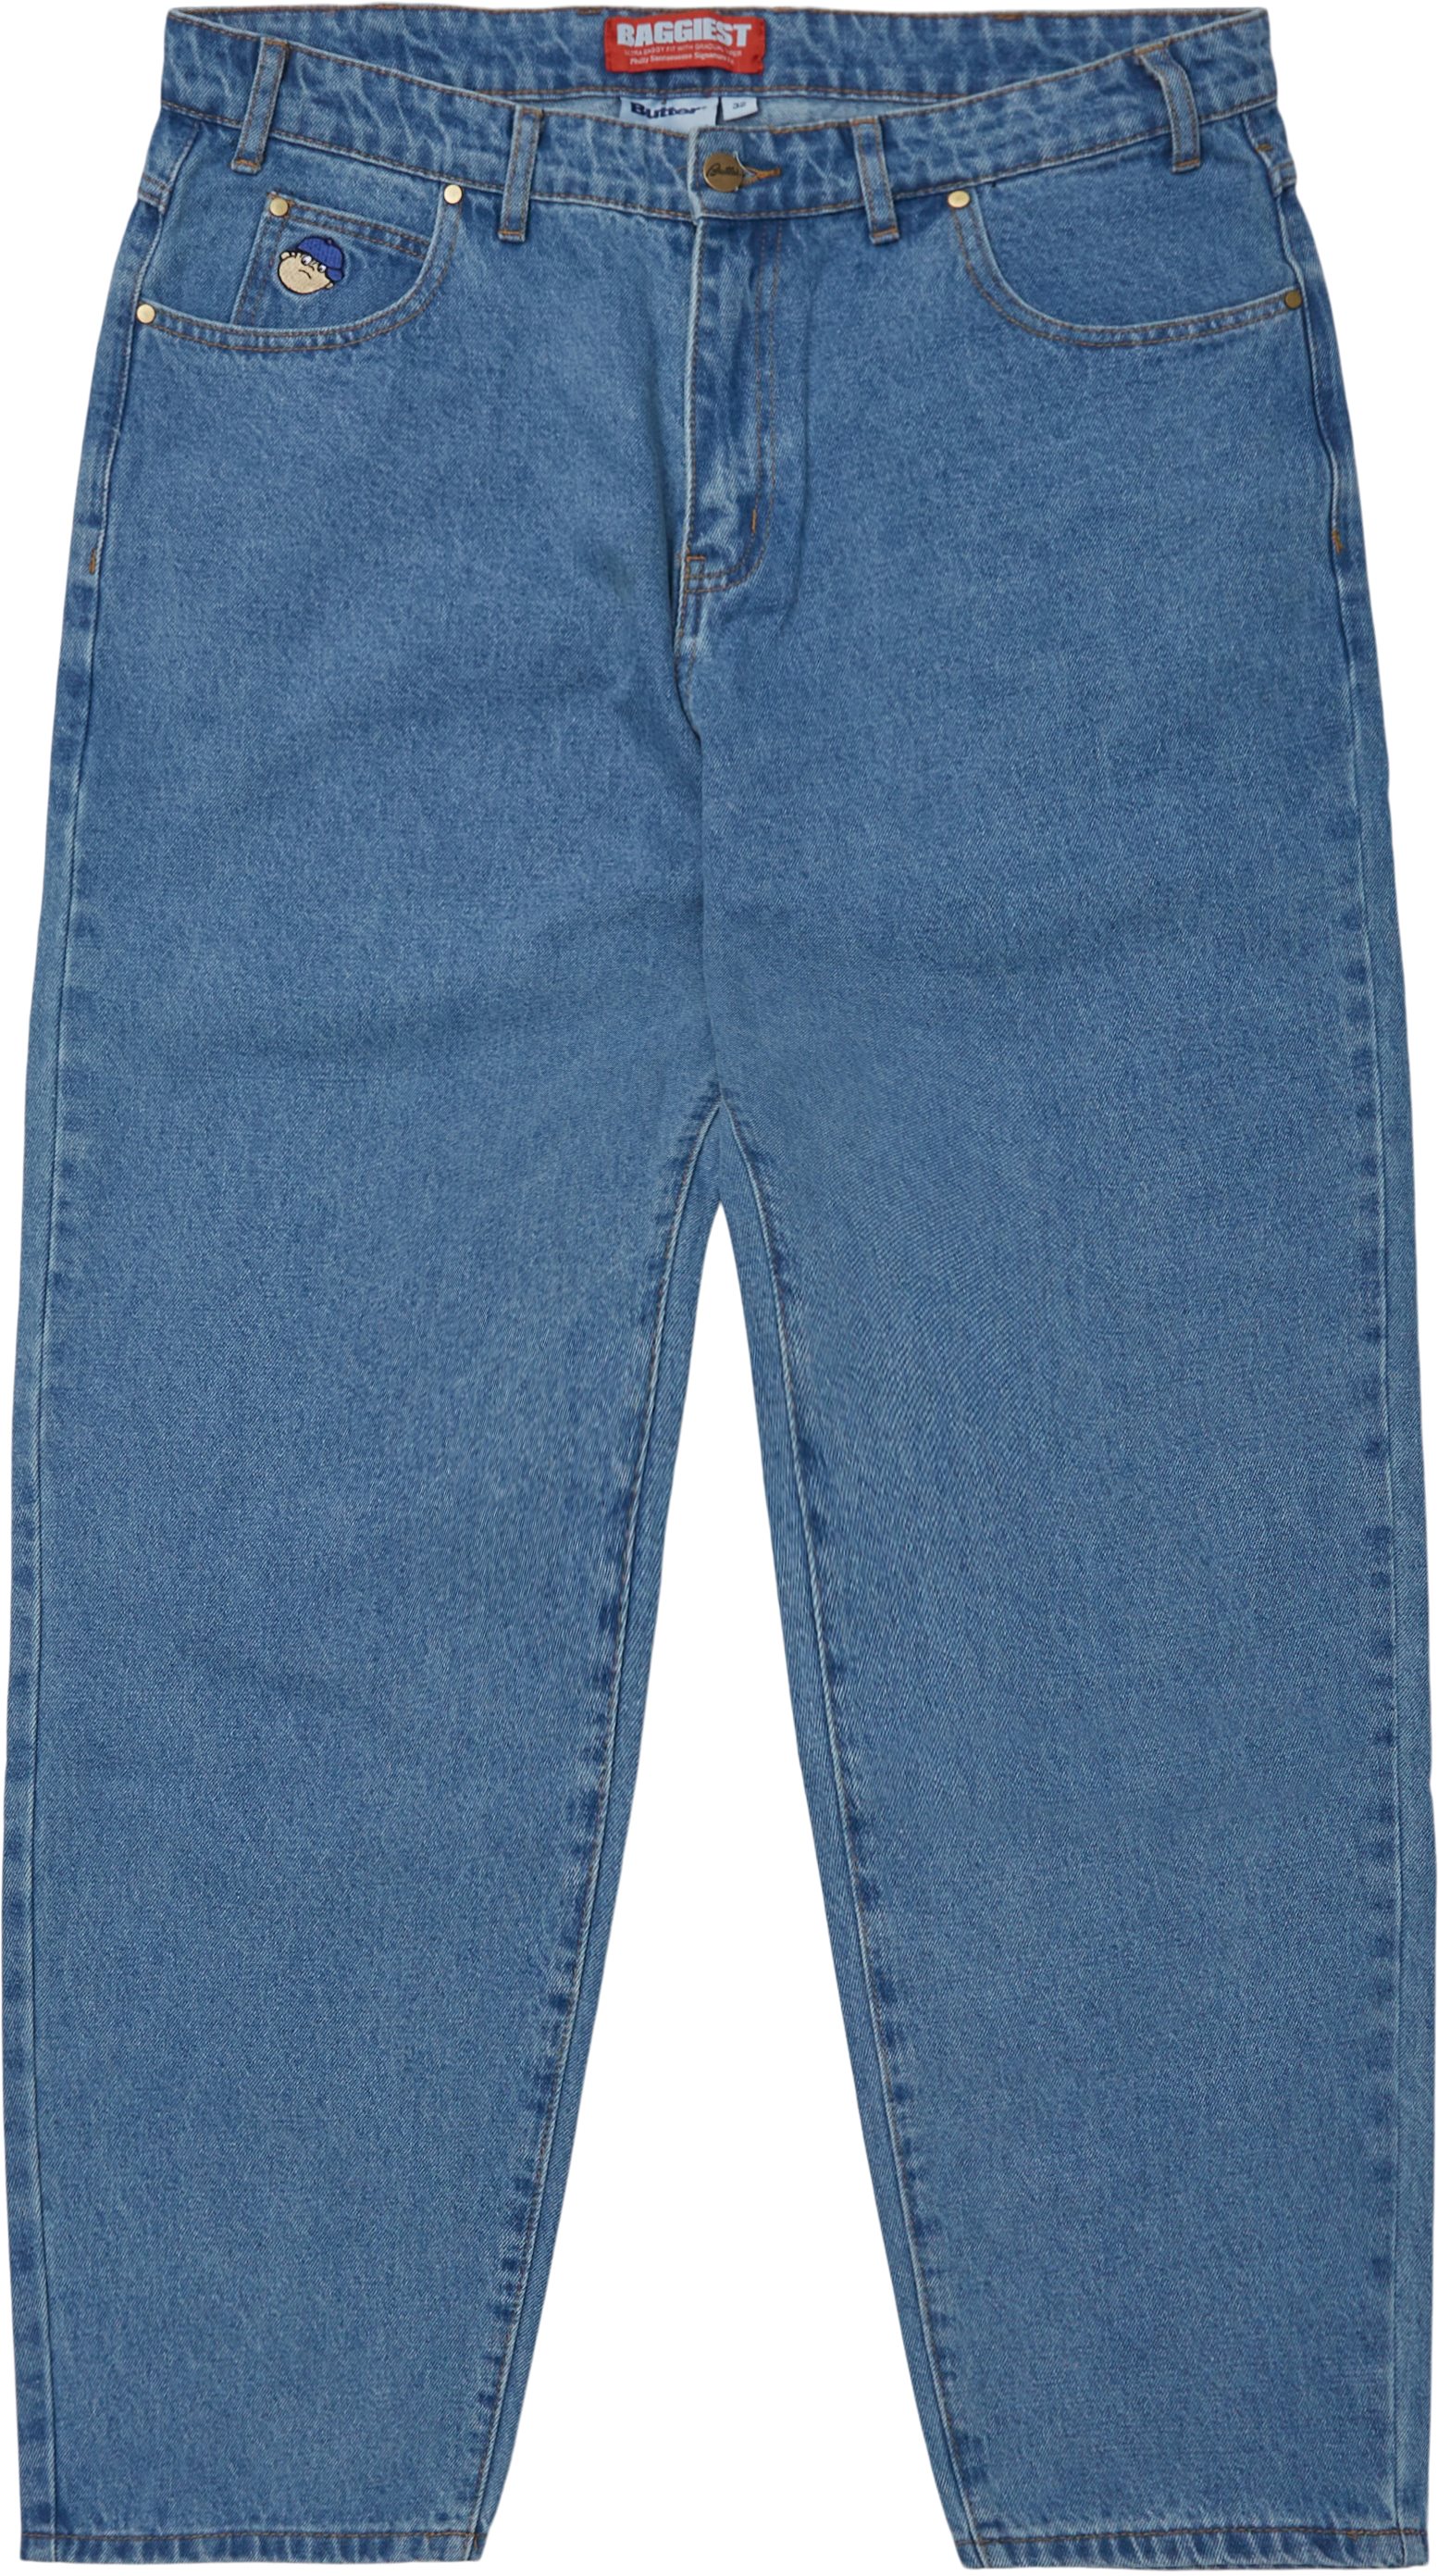 Santosuosso Jeans - Jeans - Baggy fit - Denim